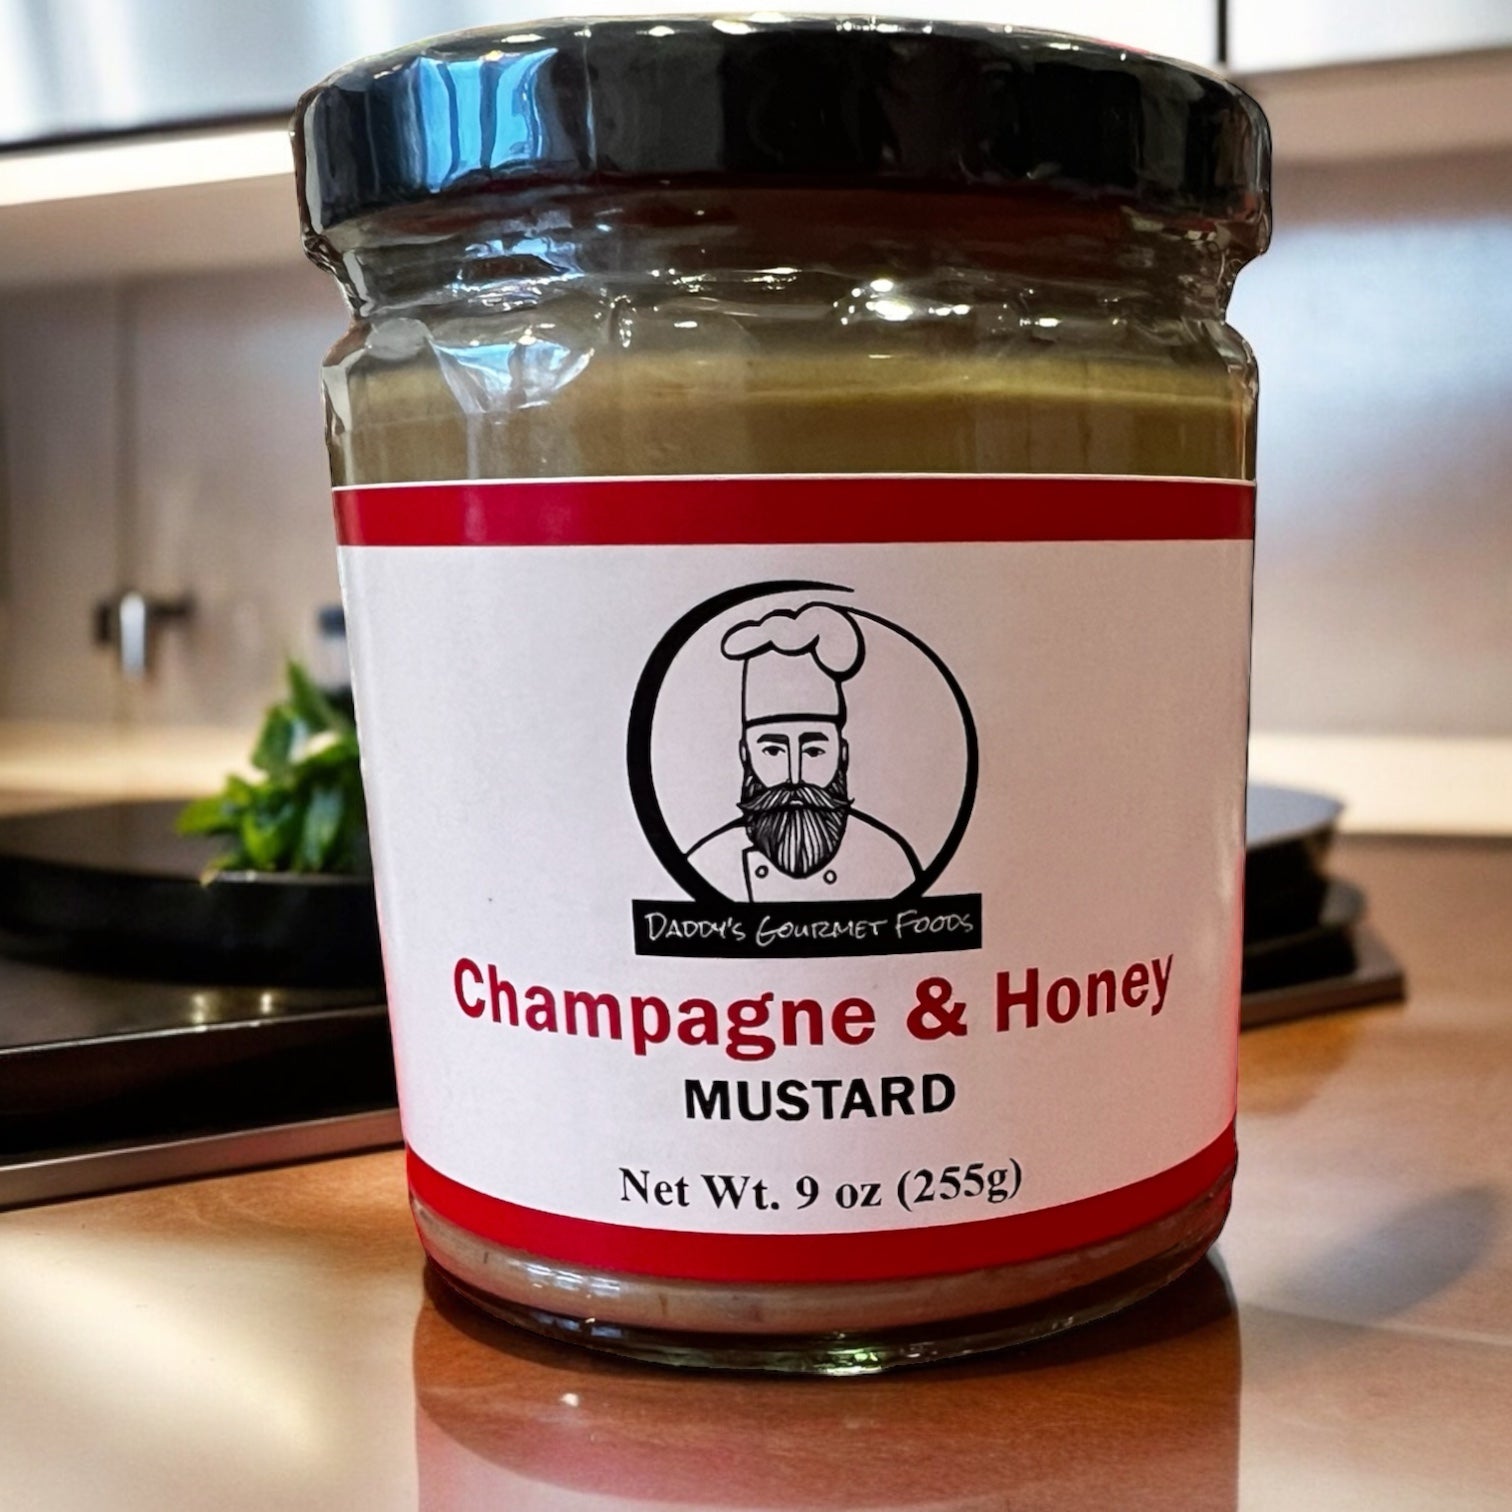 Champagne & Honey Mustard 9 oz (255g) Daddy's Gourmet Foods